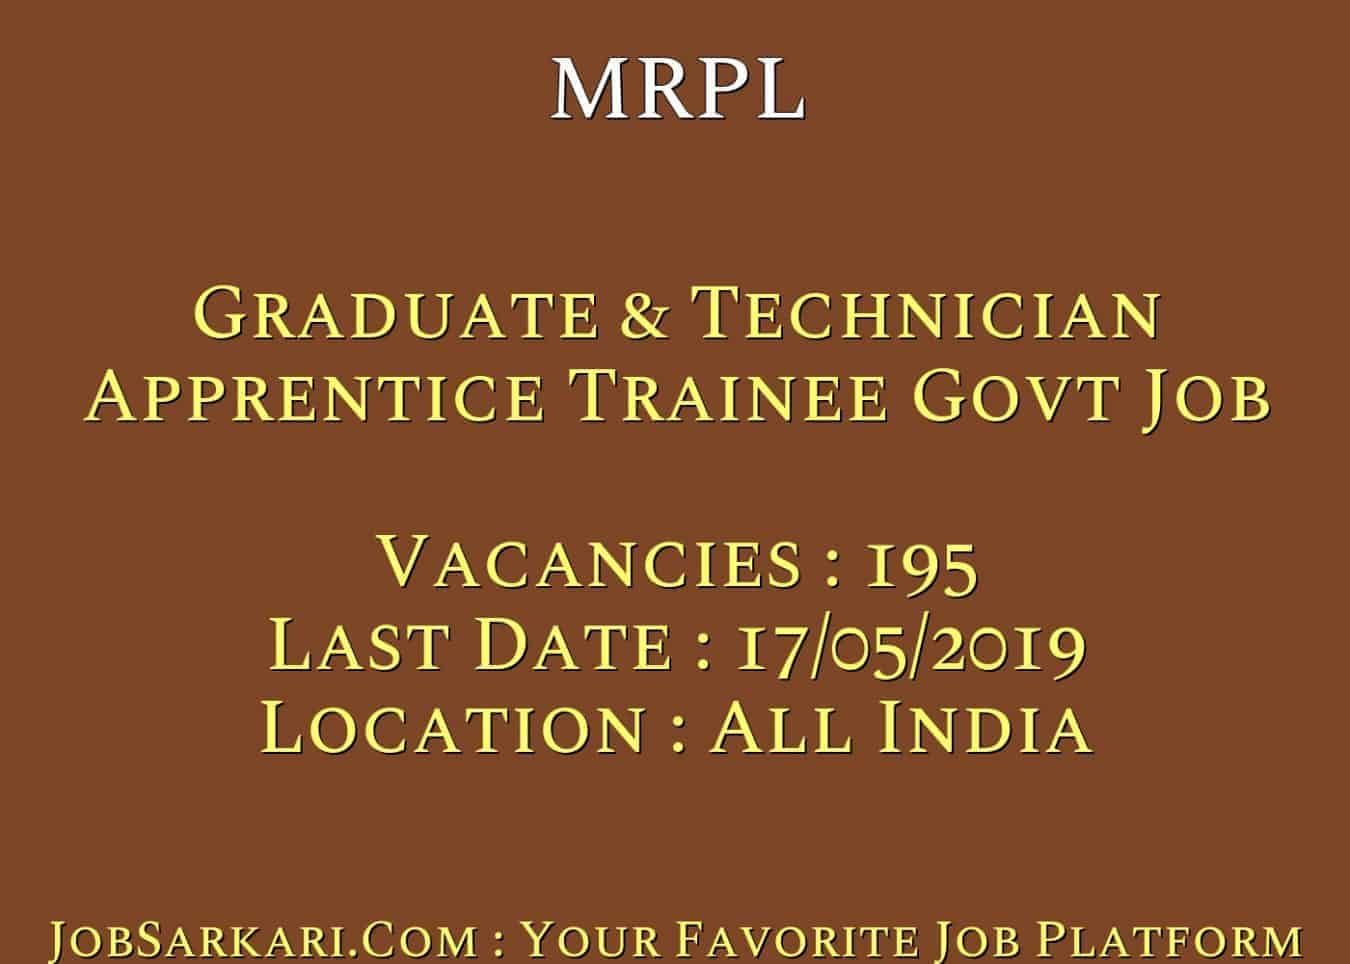 MRPL Recruitment 2019 For Graduate & Technician Apprentice Trainee Govt Job